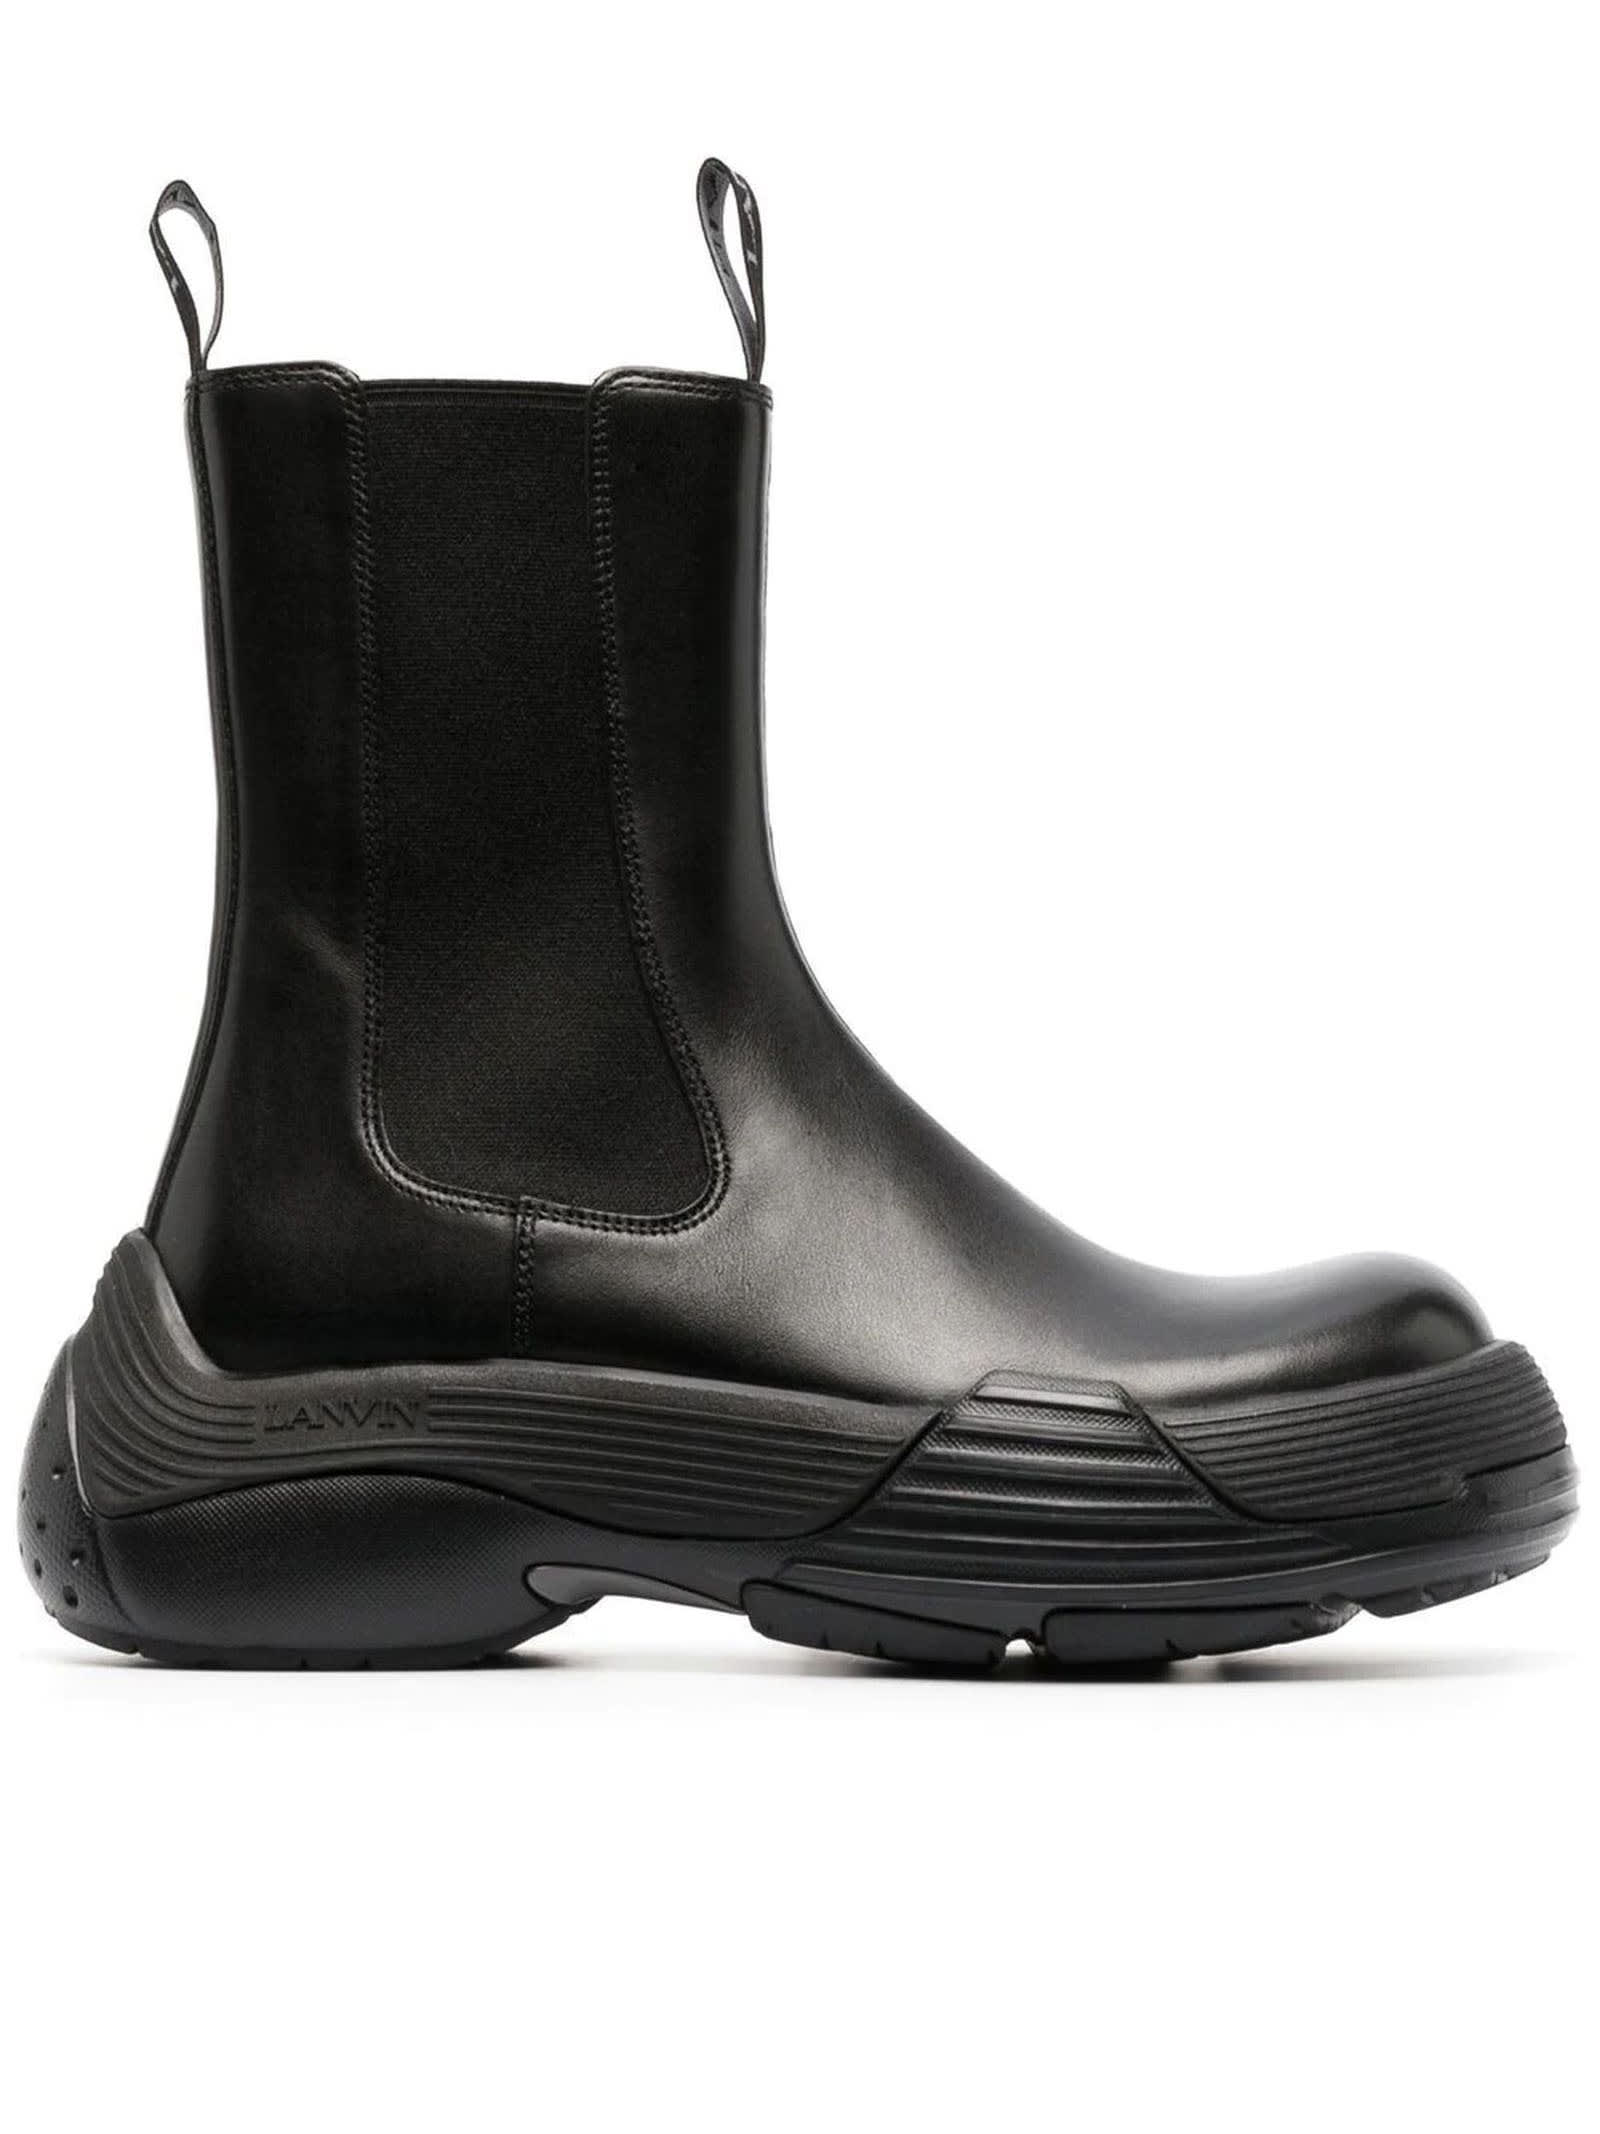 Lanvin Black Calf Leather Boots